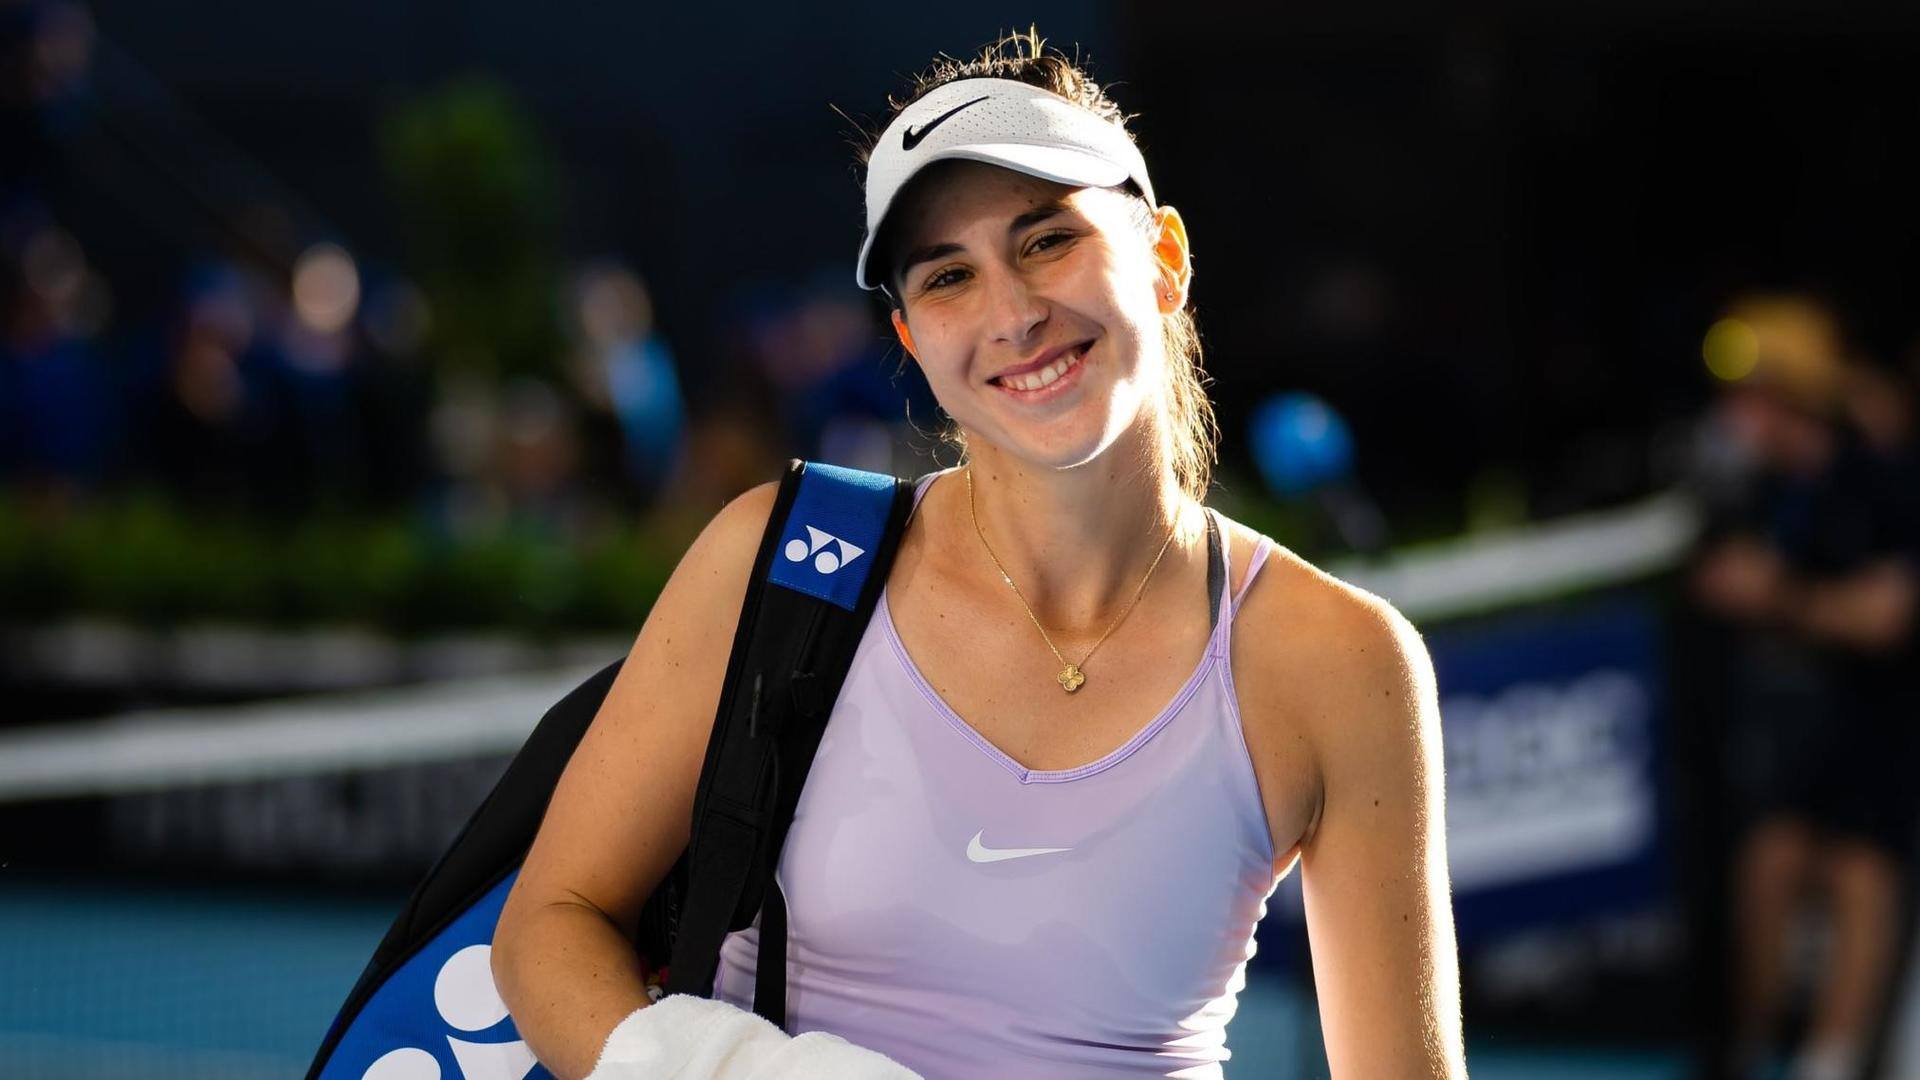 Abu Dhabi Open 2023, Belinda Bencic reaches final: Key stats